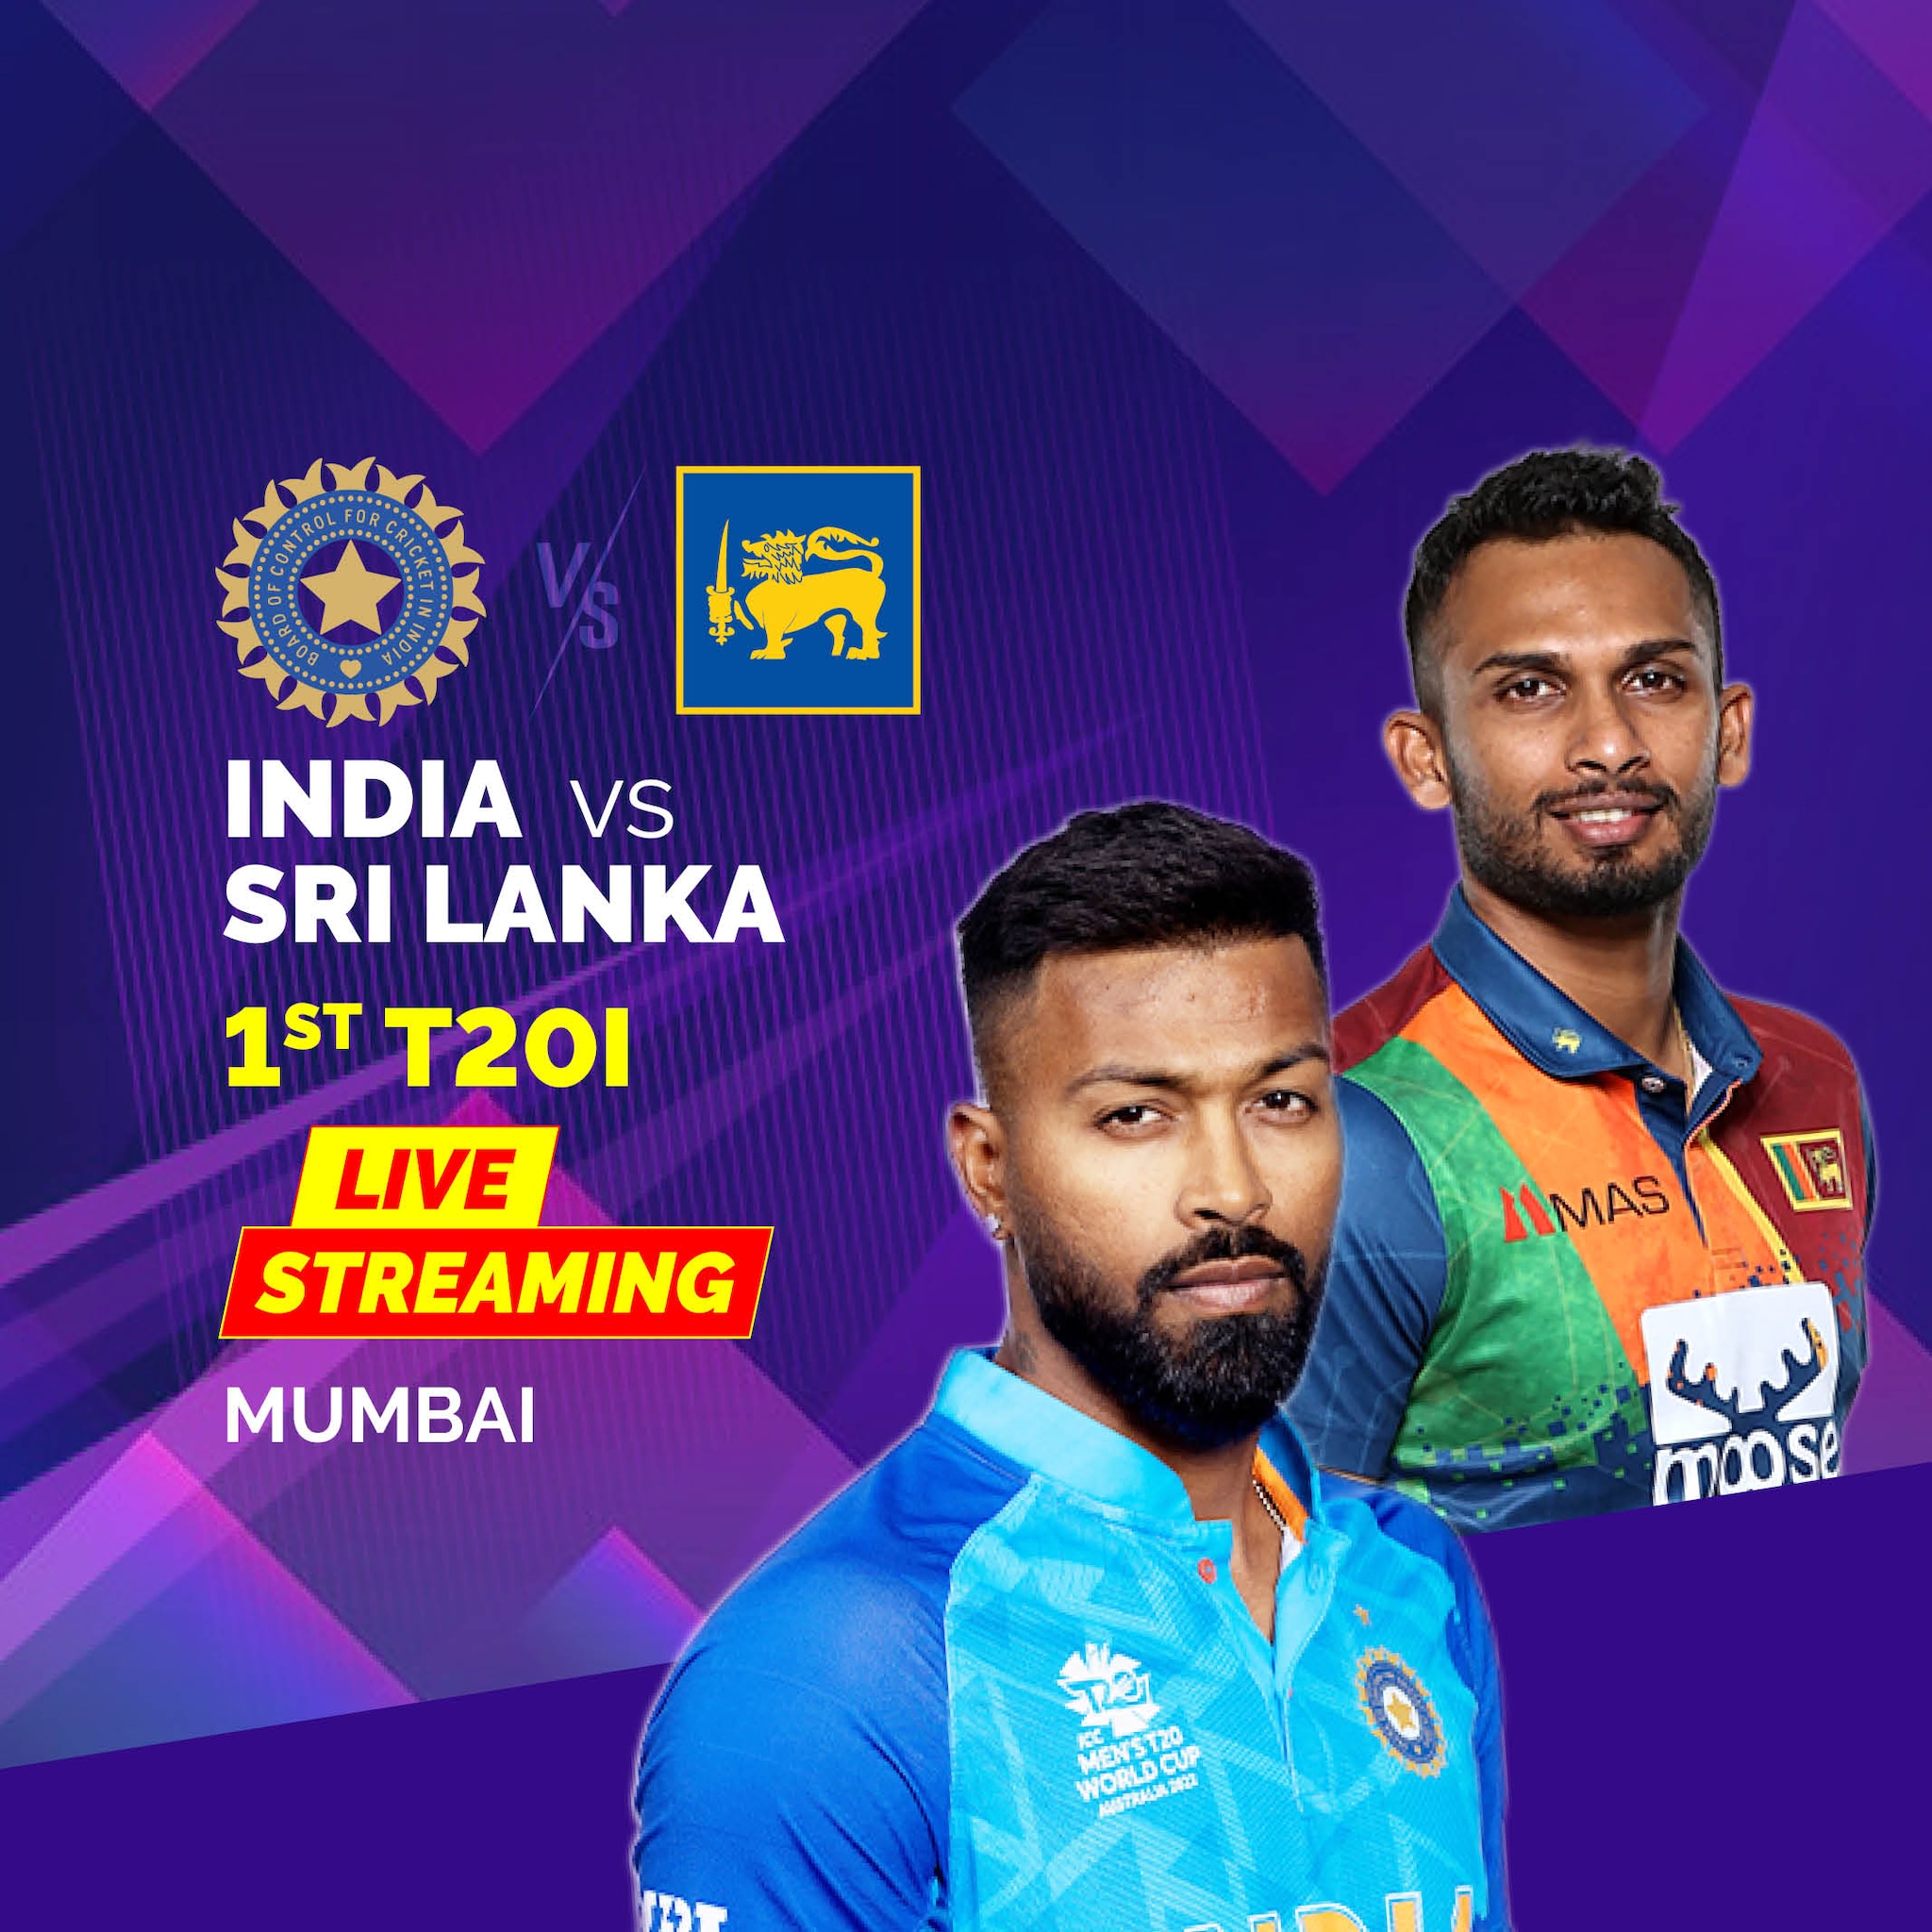 sri lanka india t20 match live